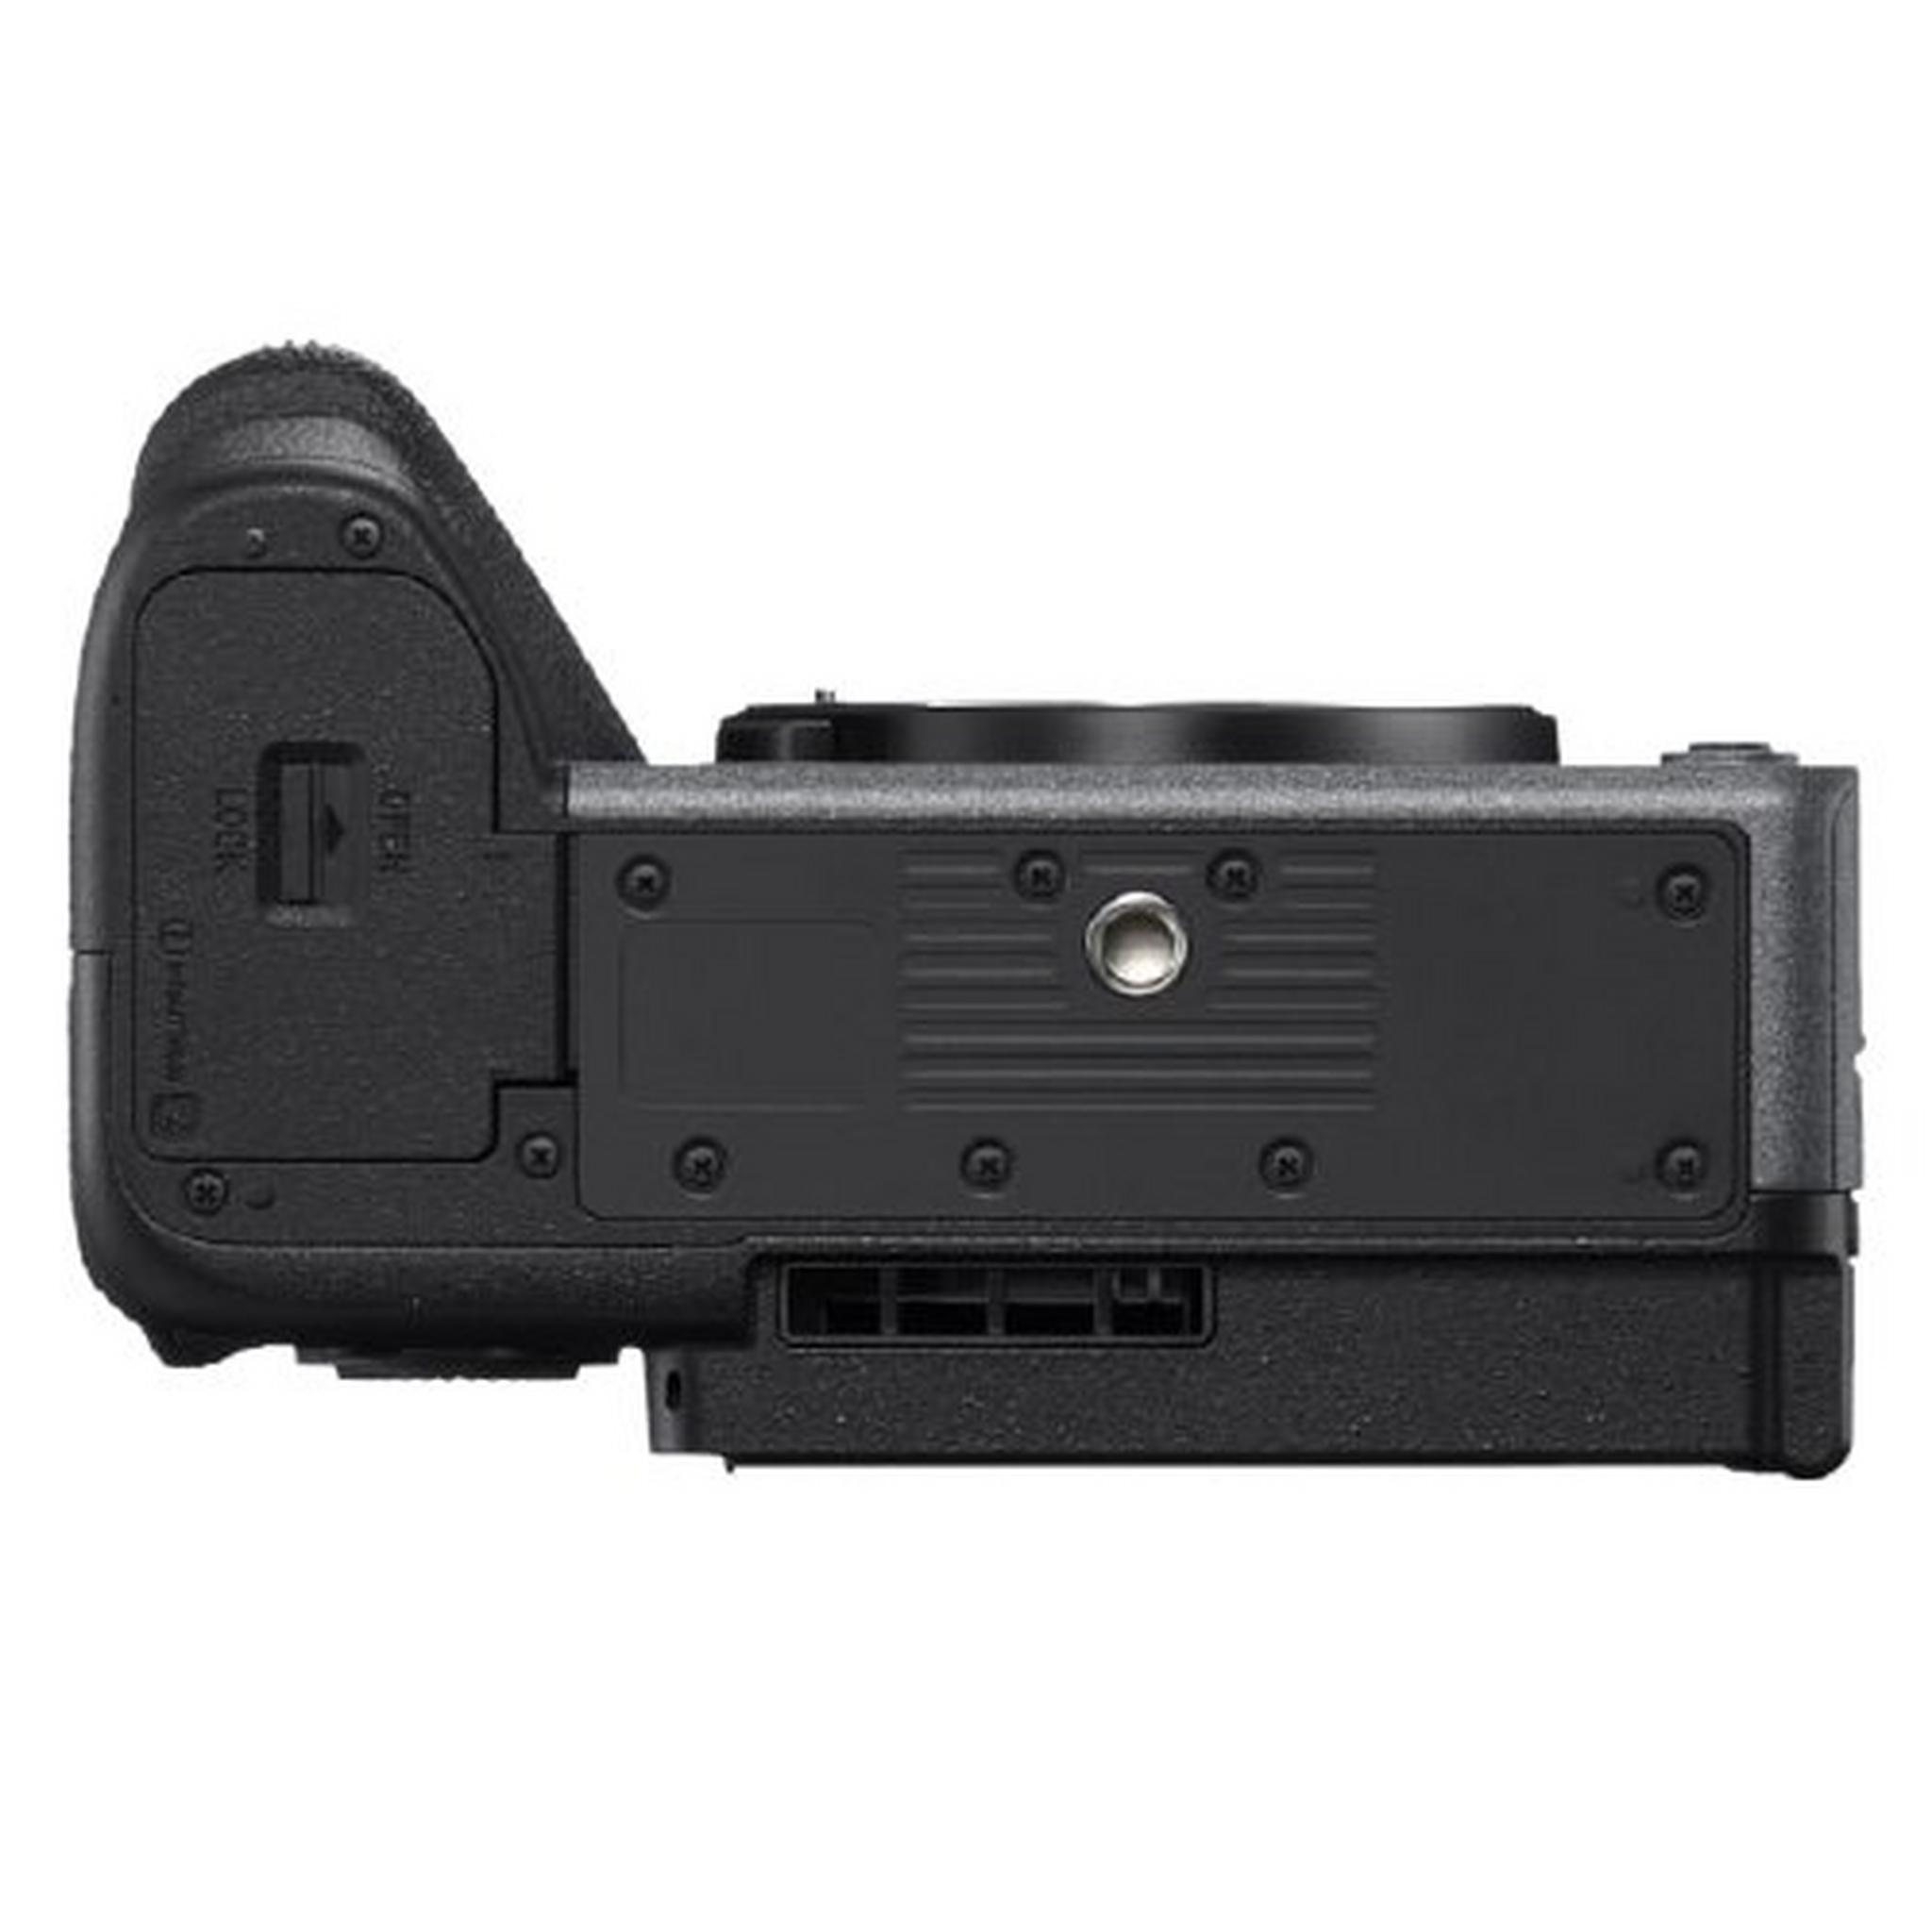 Sony Alpha FX3 Full-Frame Cinema Camera (ILME-FX3)